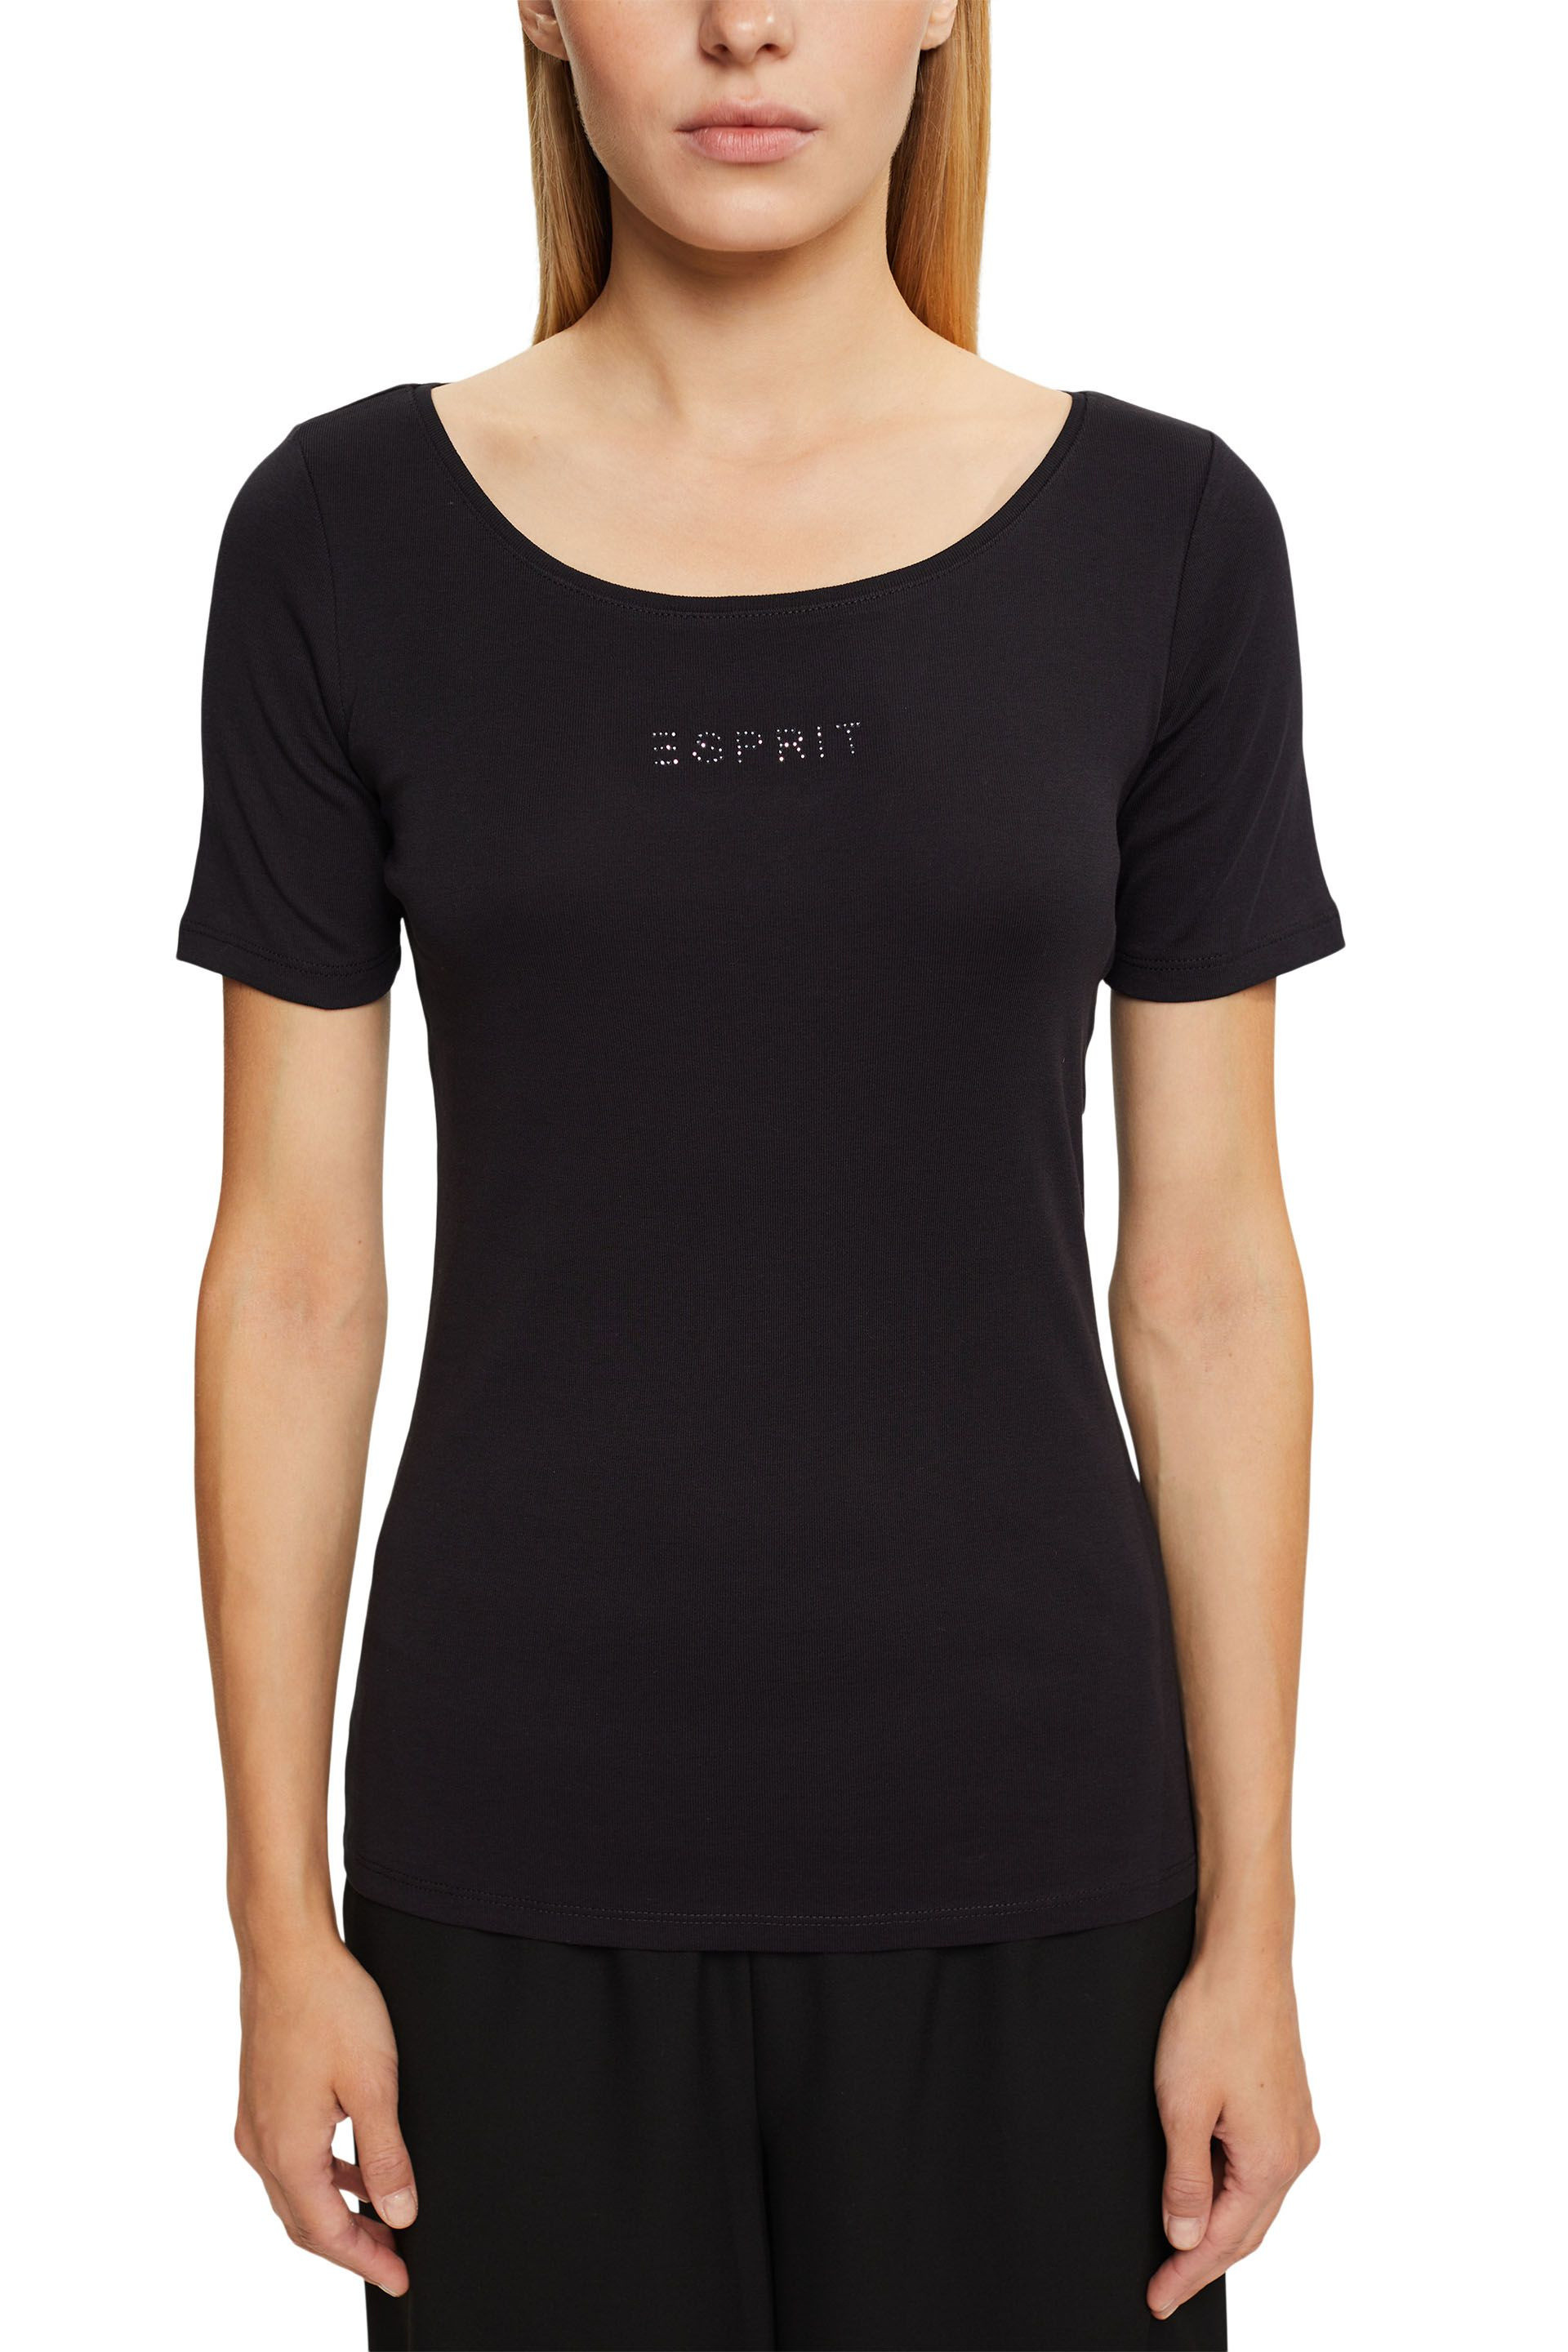 Esprit - T-shirt con logo in cotone, Nero, large image number 1